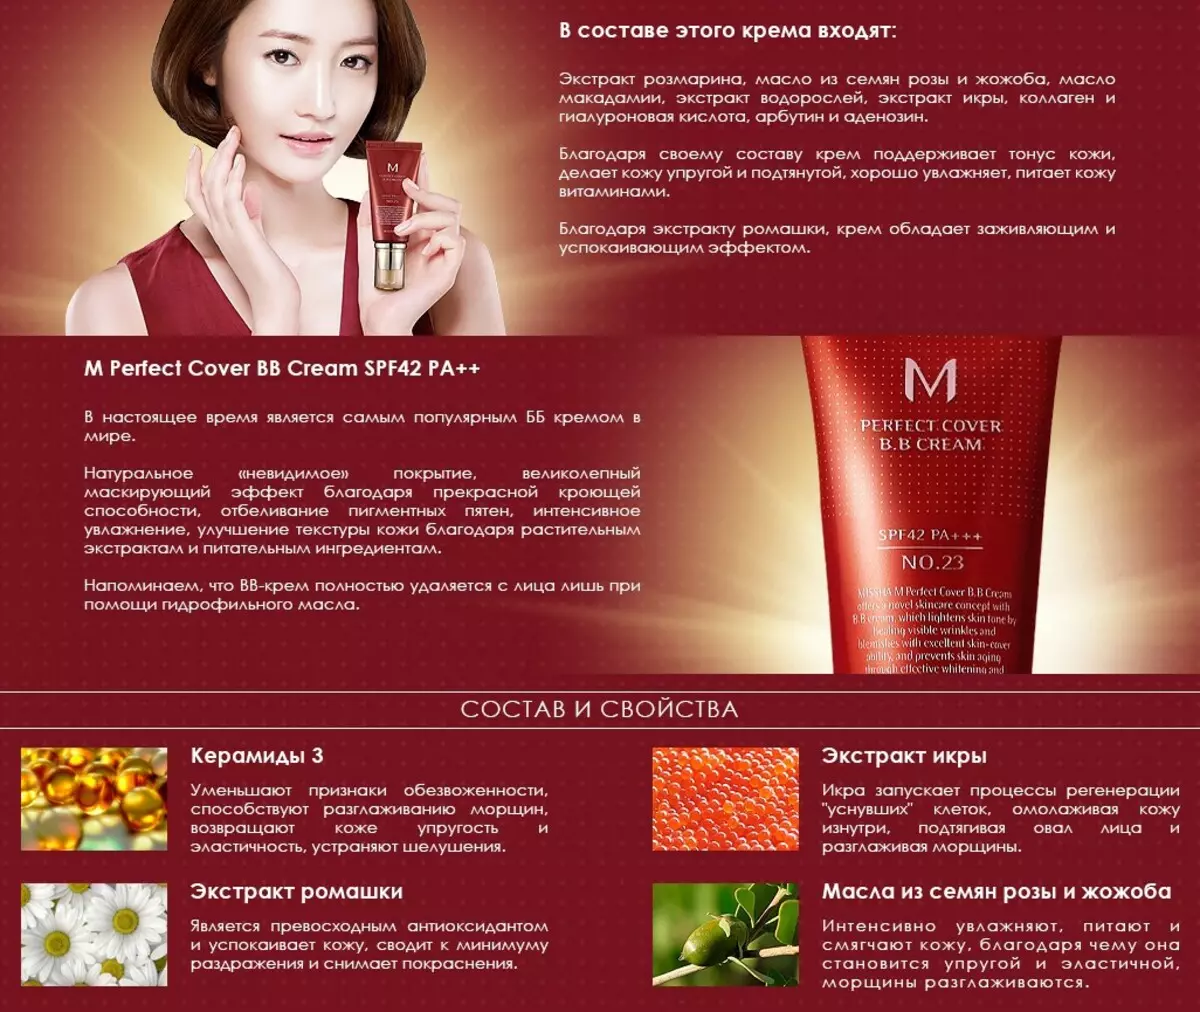 Missha Cosmetics: Kuchon, prah i opis korejske profesionalne kozmetike. Pregledi kozmetologa 4923_12